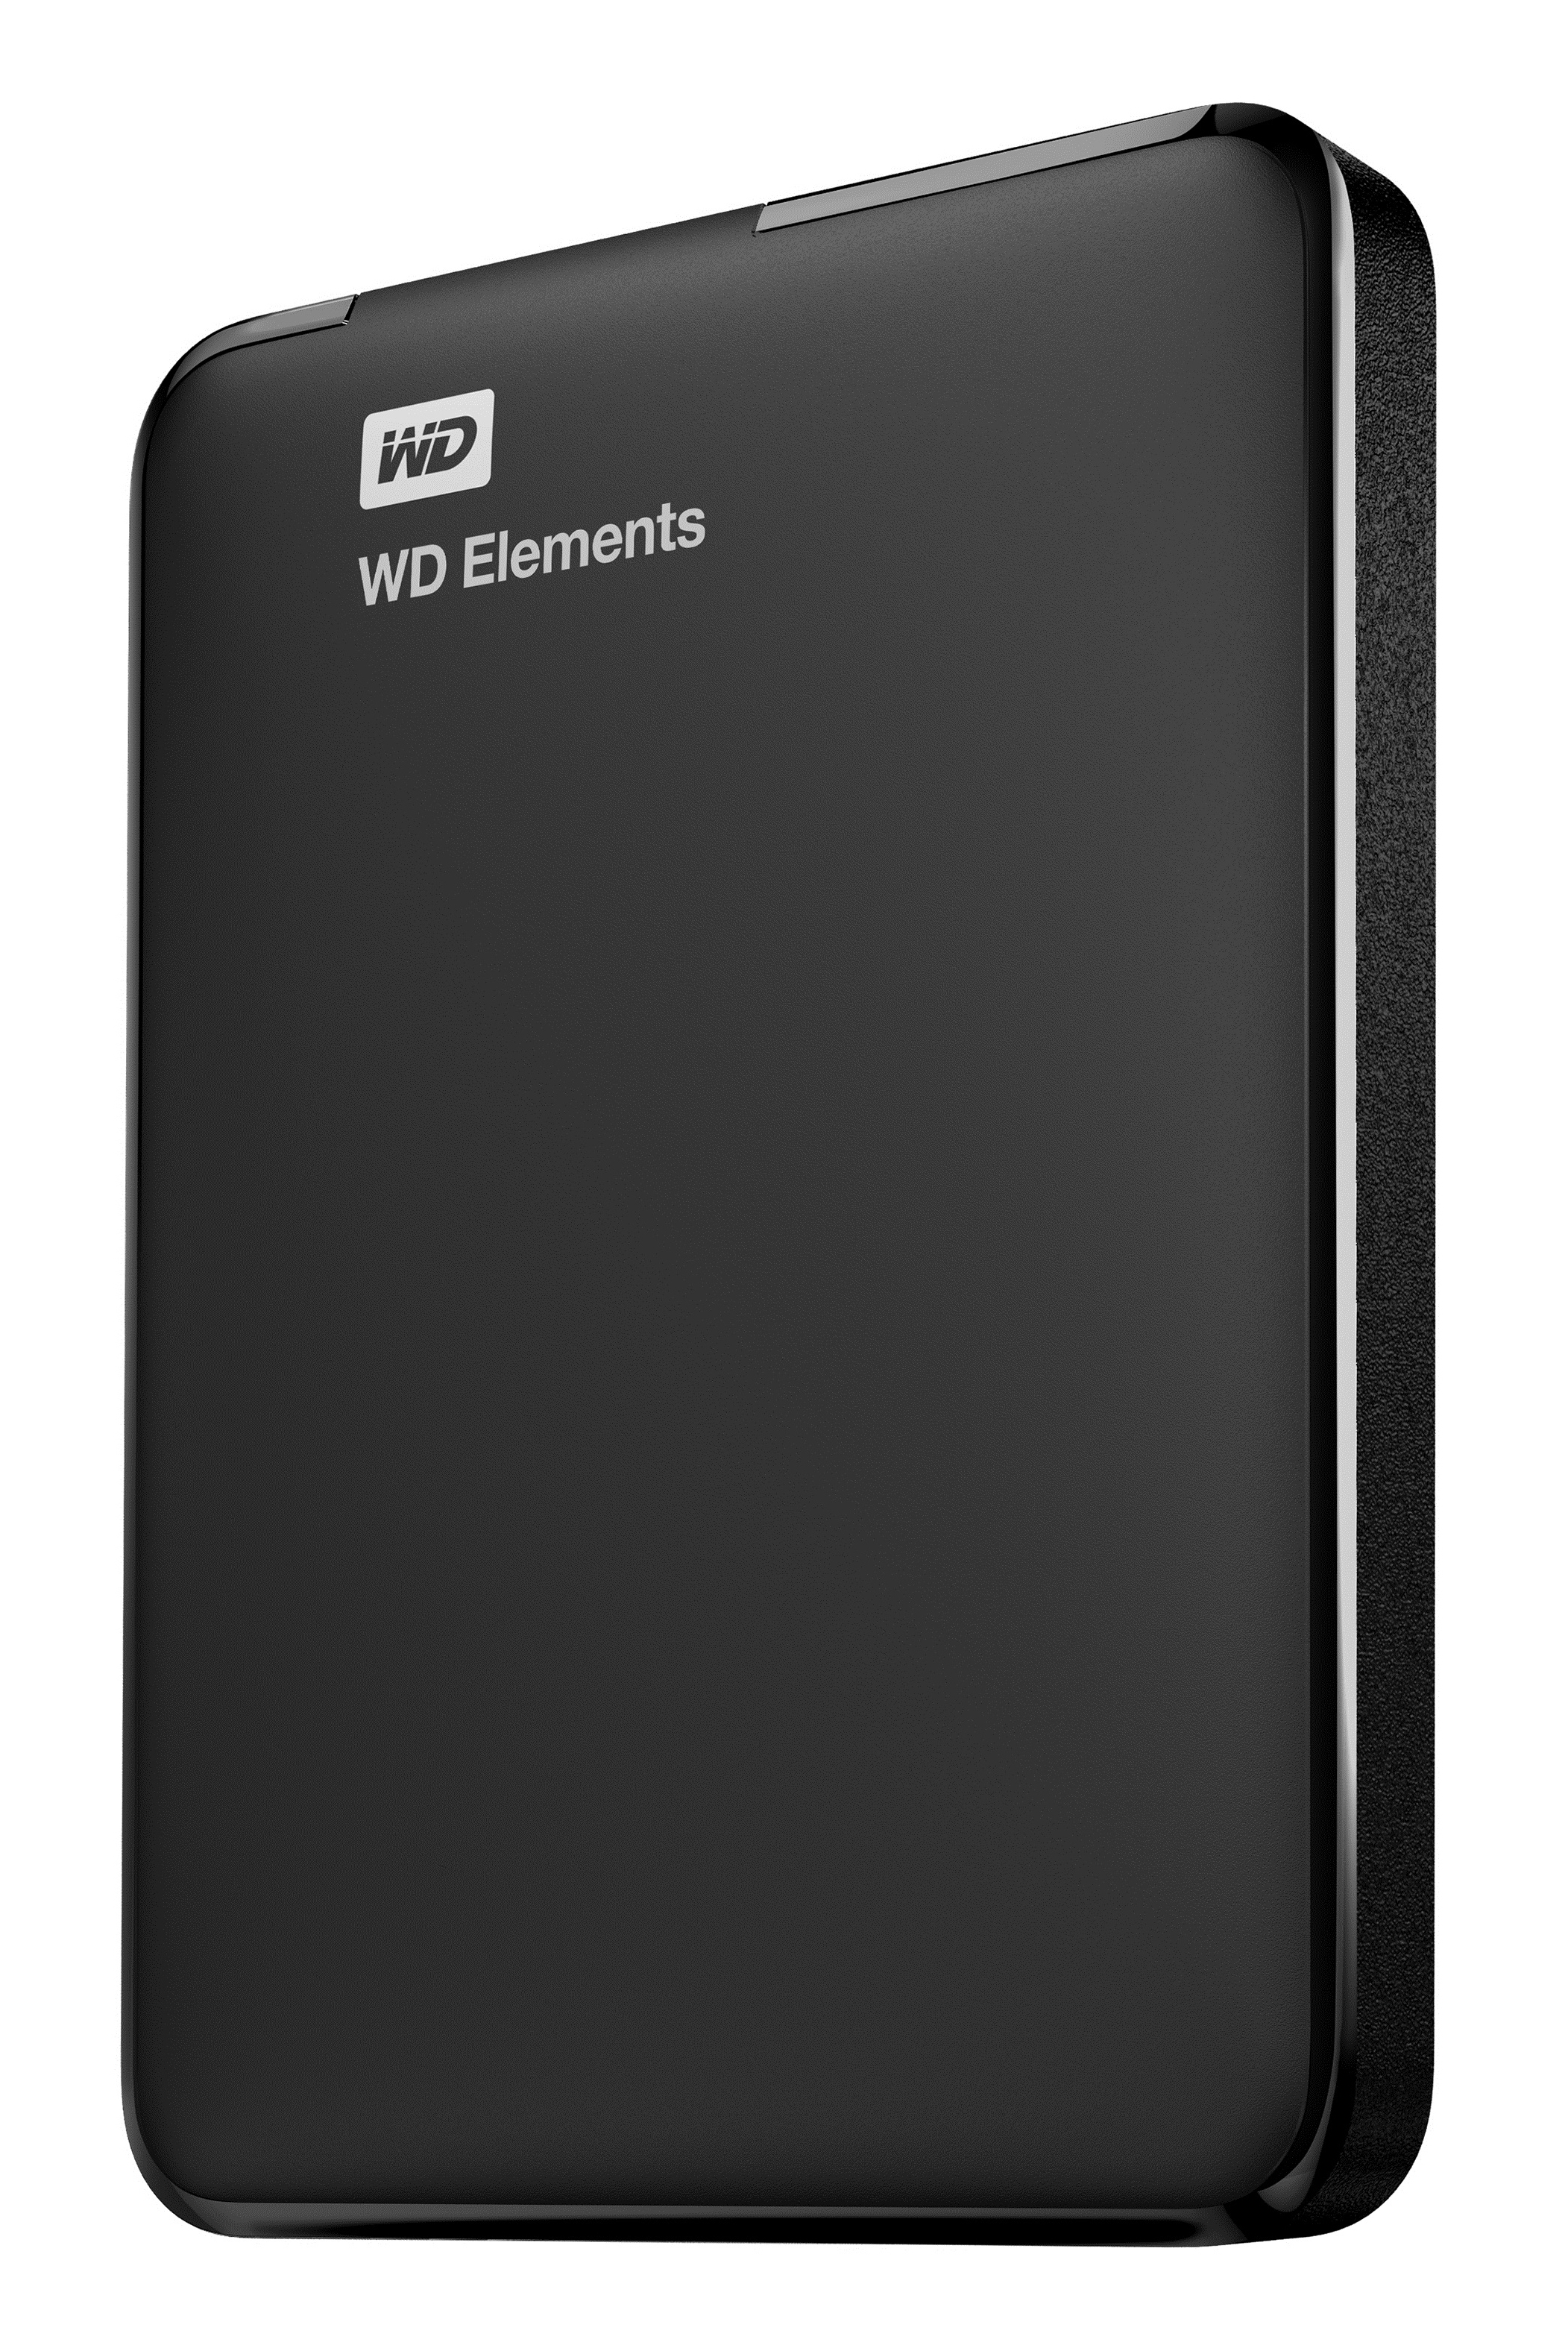 HD EXT 2,5 4TB WD ELEMENTS USB3 NEW NERO PORTABLE